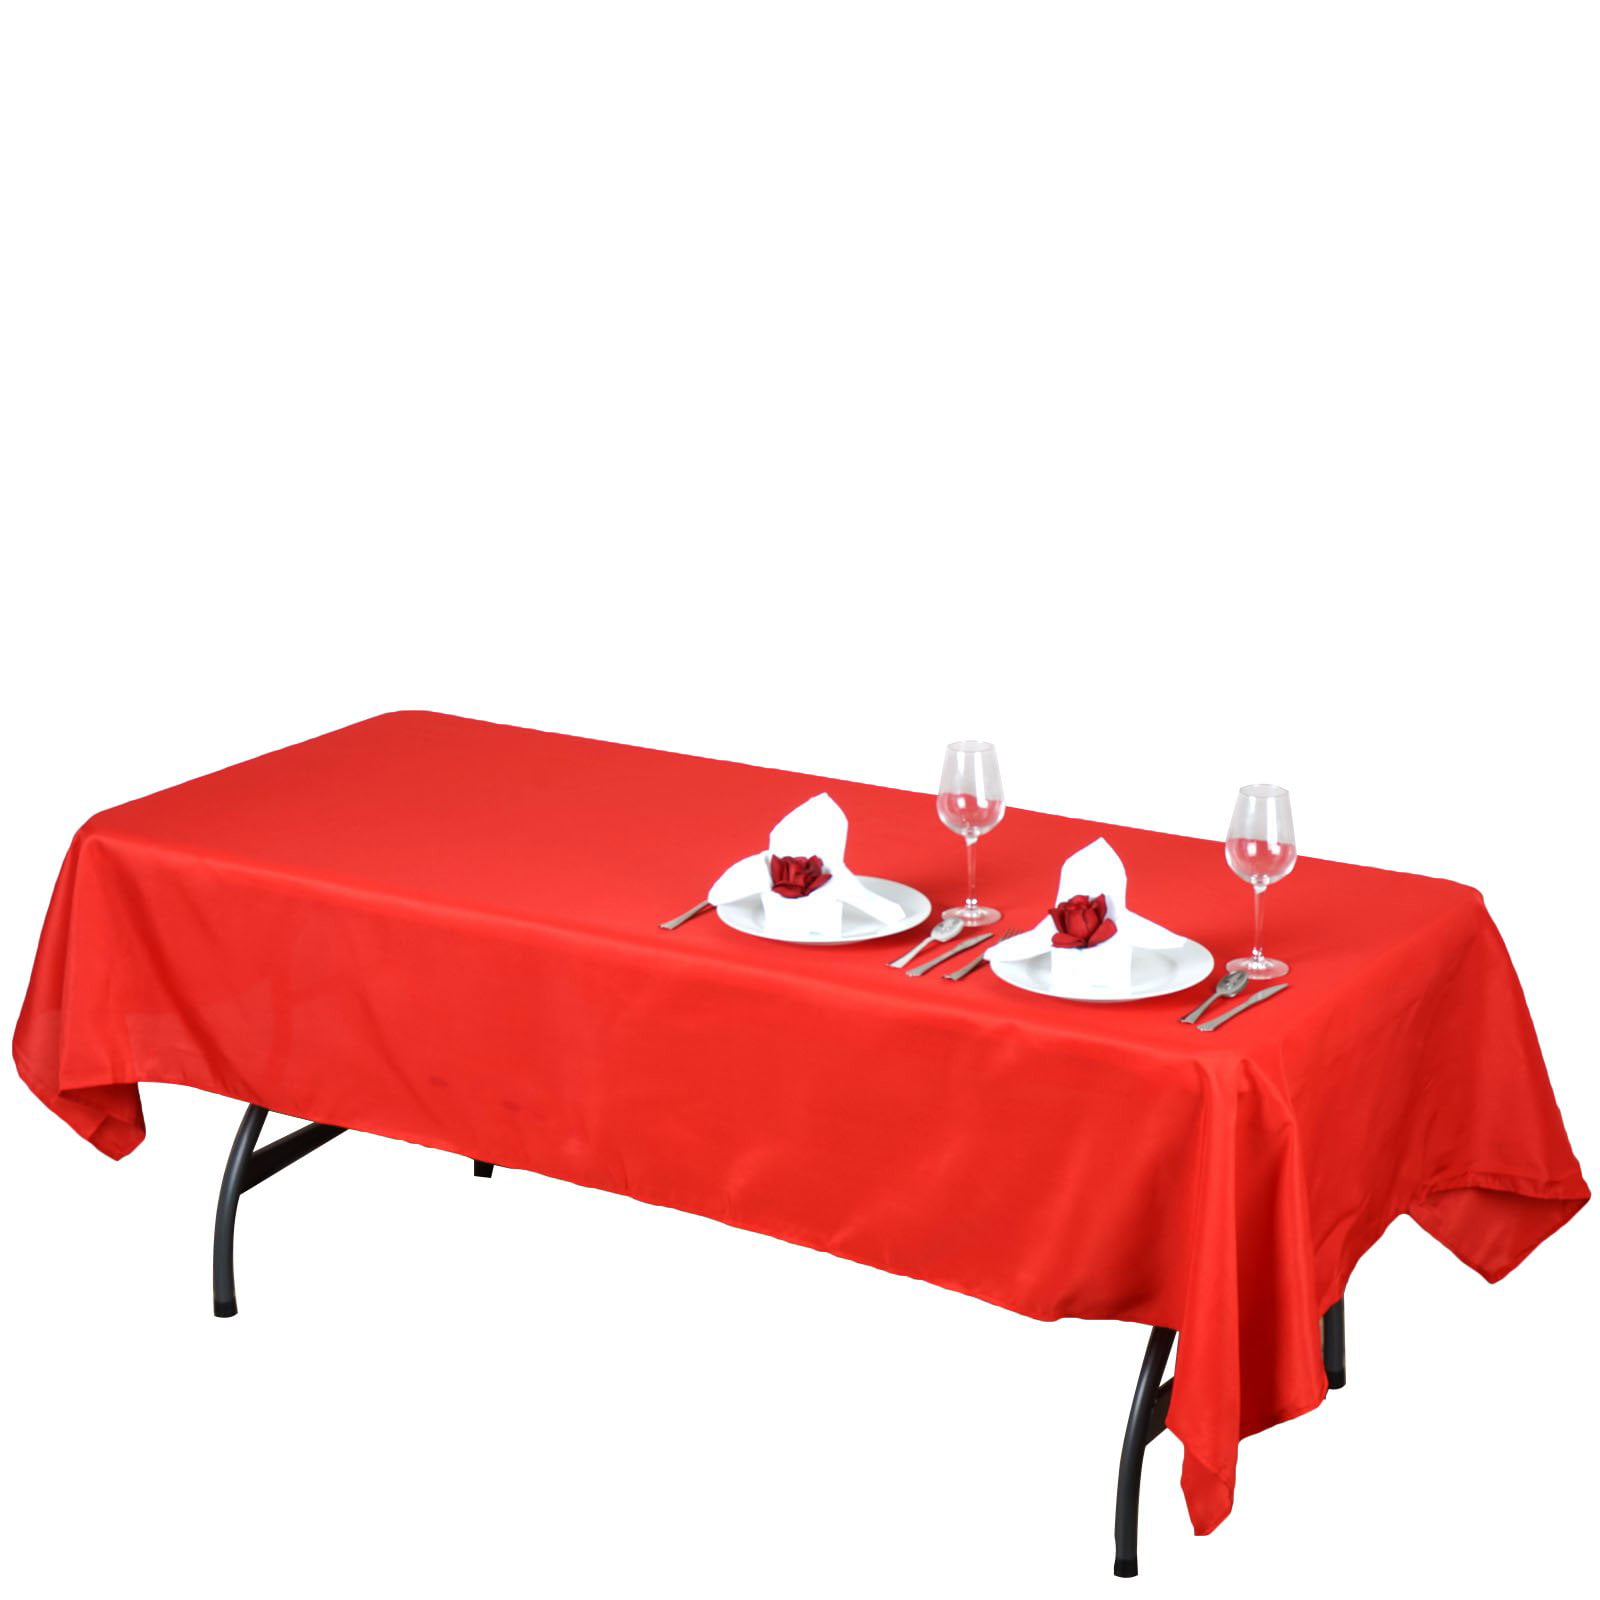 Custom size linen 100/% natural linen. Square Round Rectangular tablecloth linens Terracotta linen tablecloth